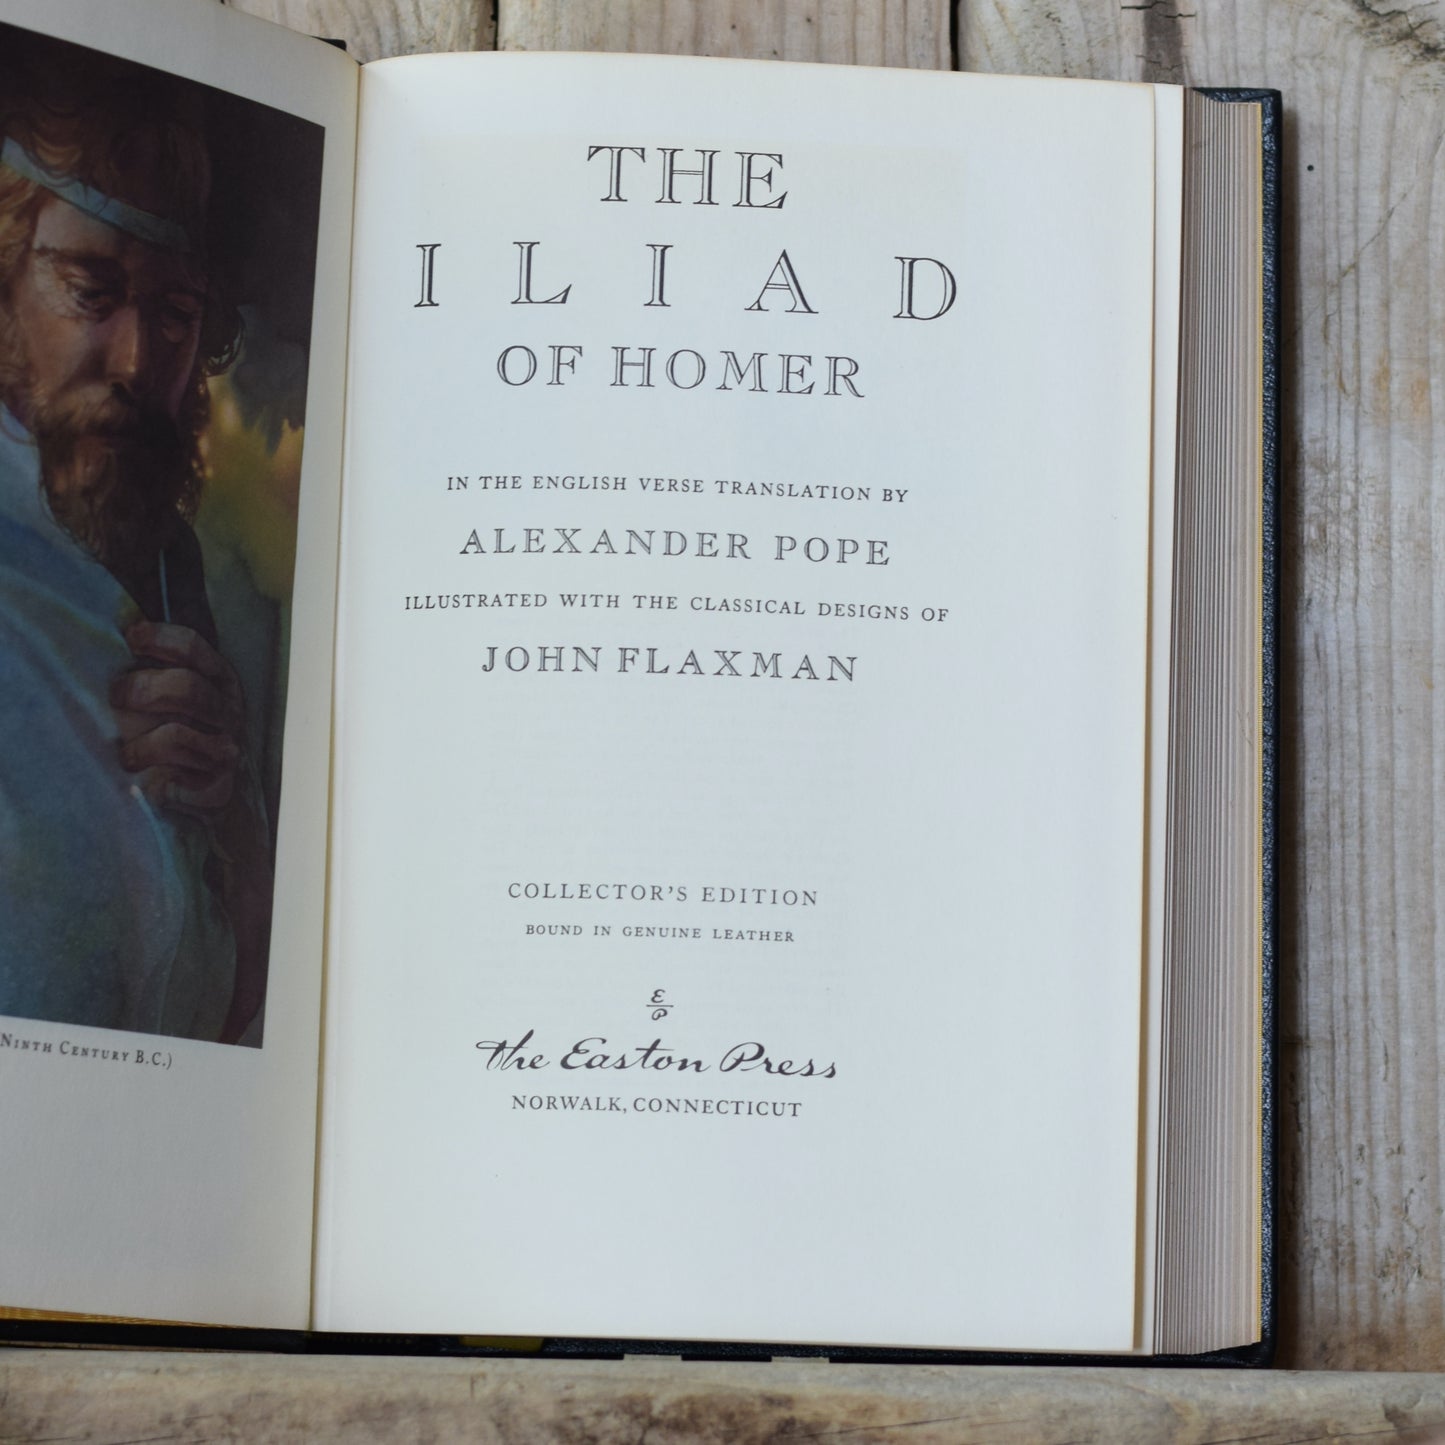 Vintage Fiction Hardback: Homer - The Odyssey and The Iliad, Easton Press